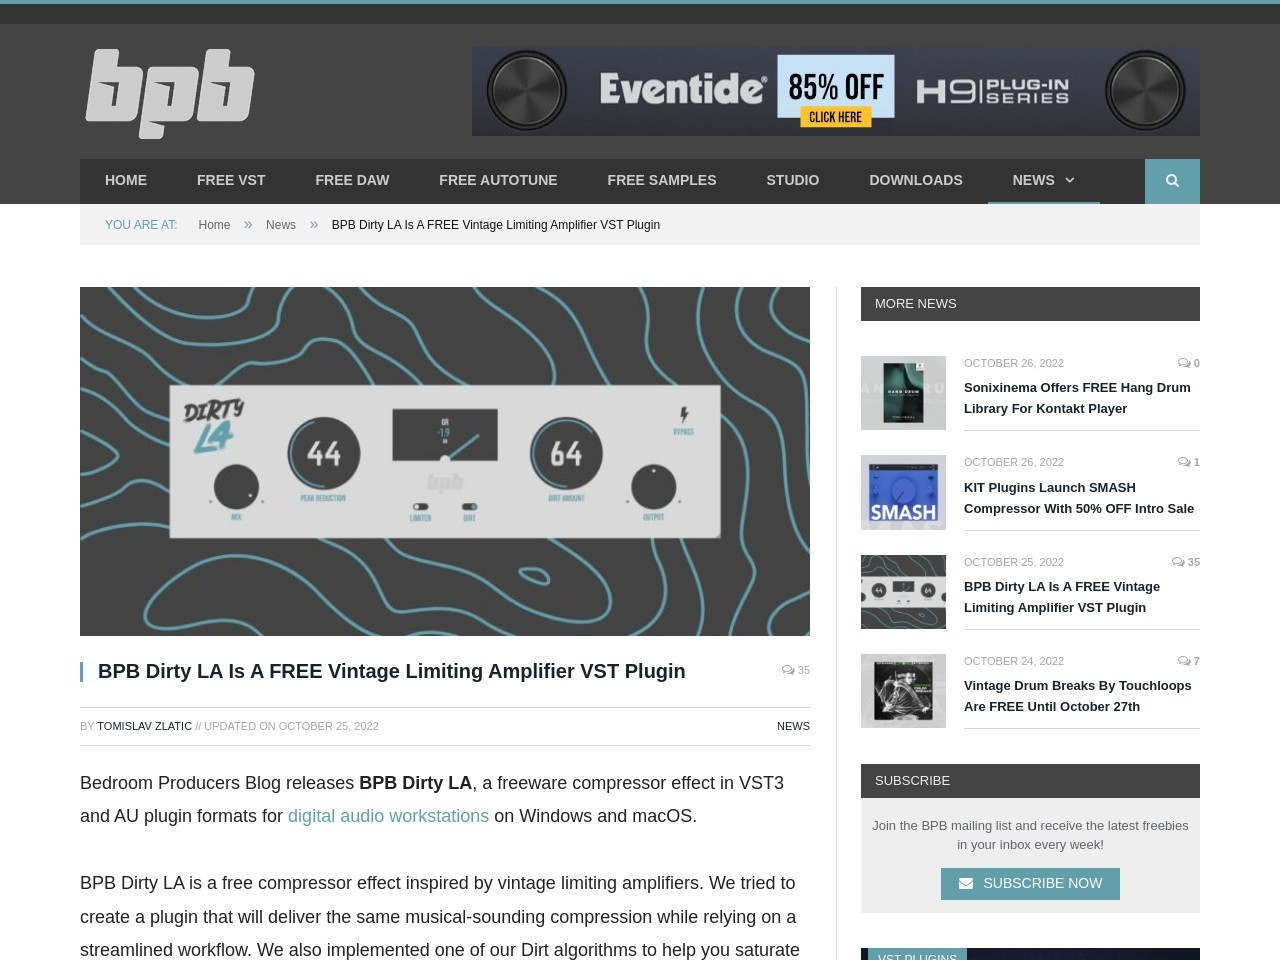 BPB Dirty LA Is A FREE Vintage Limiting Amplifier VST Plugin